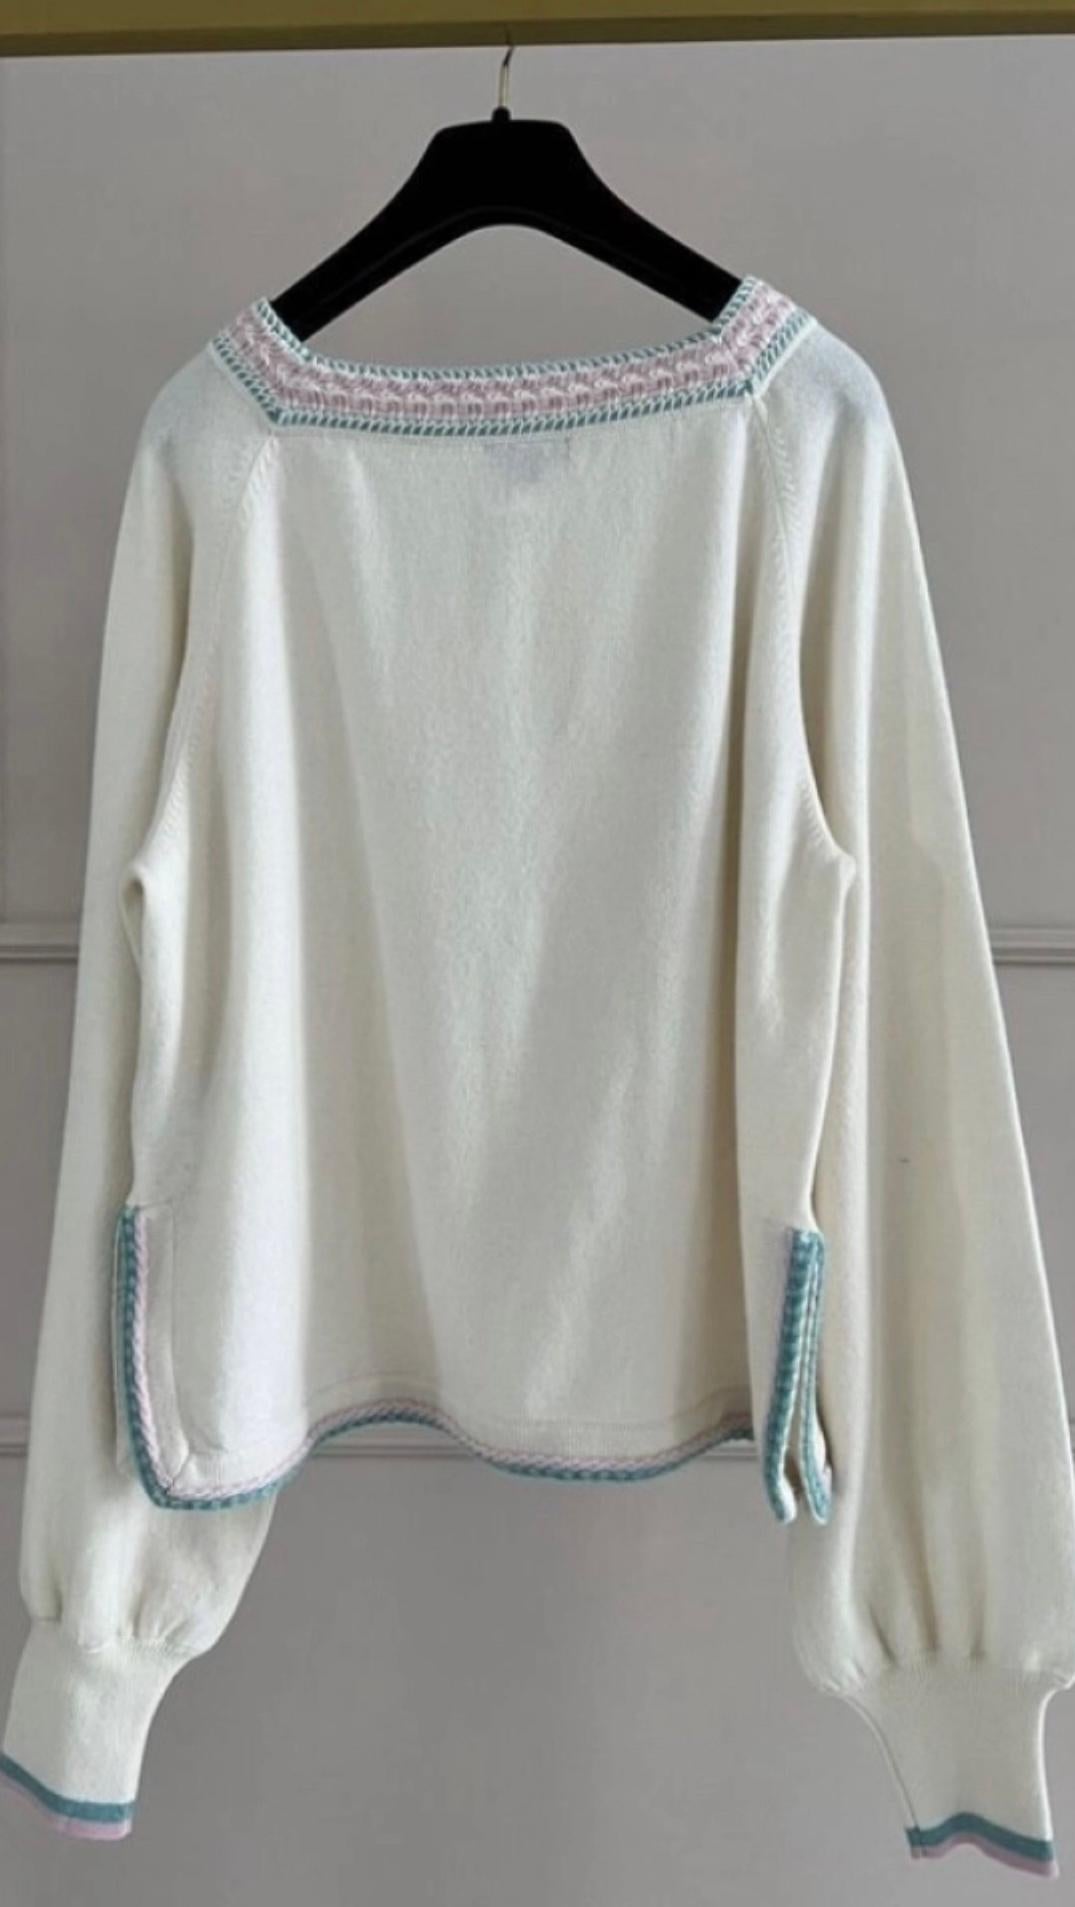 Chanel Ecru cashmere jumper from Paris/Seoul Collection
Size mark 42 FR, pristine condition